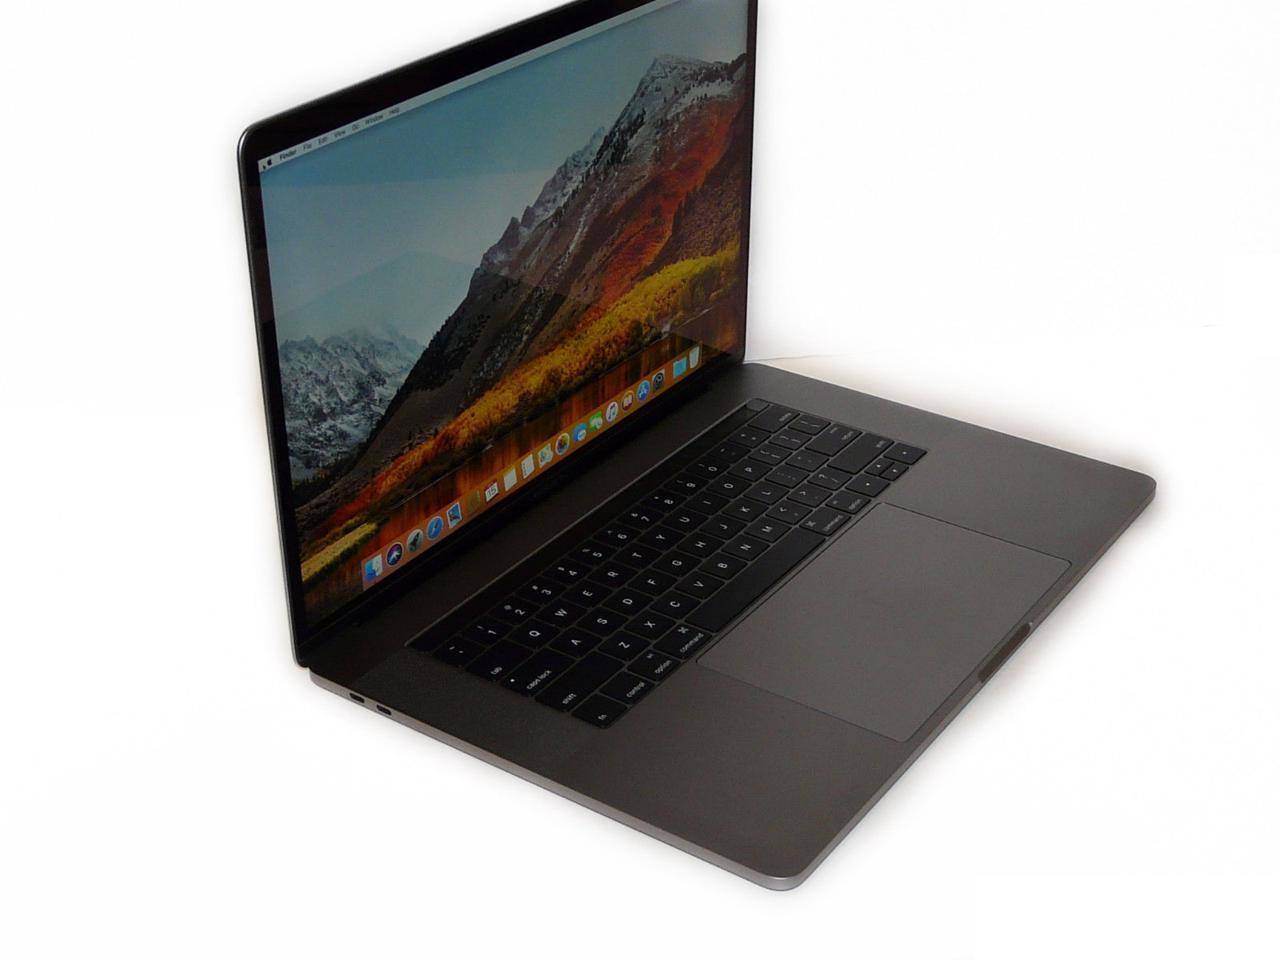 macbook refurbished 15 inch